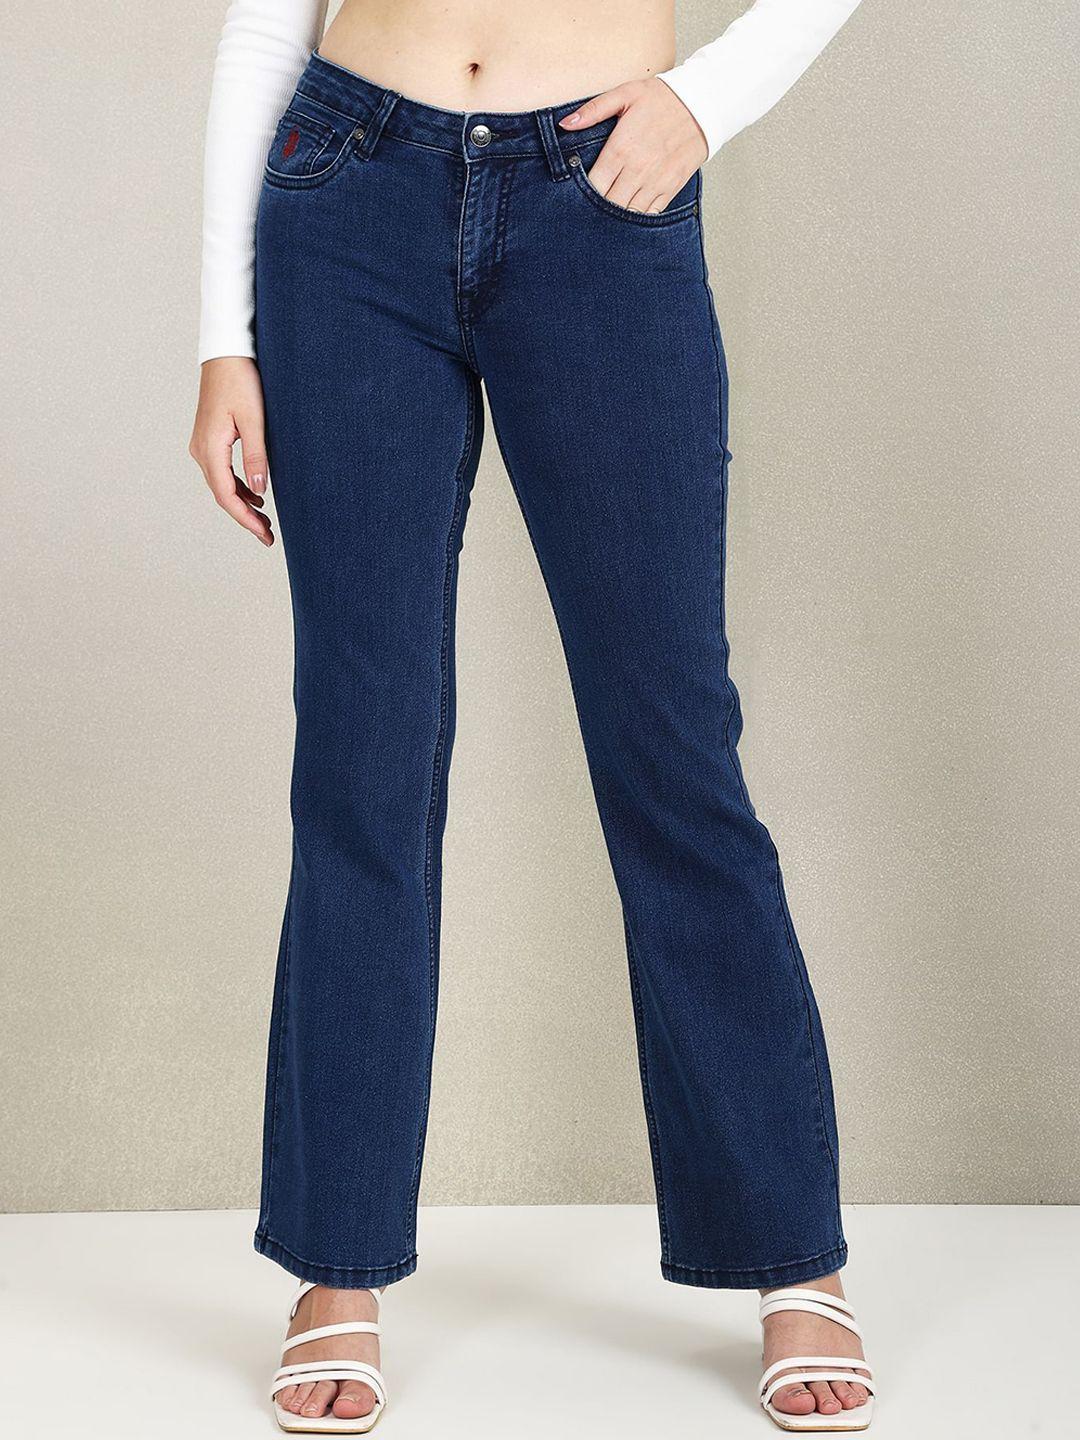 u.s. polo assn. women women mid-rise bootcut jeans